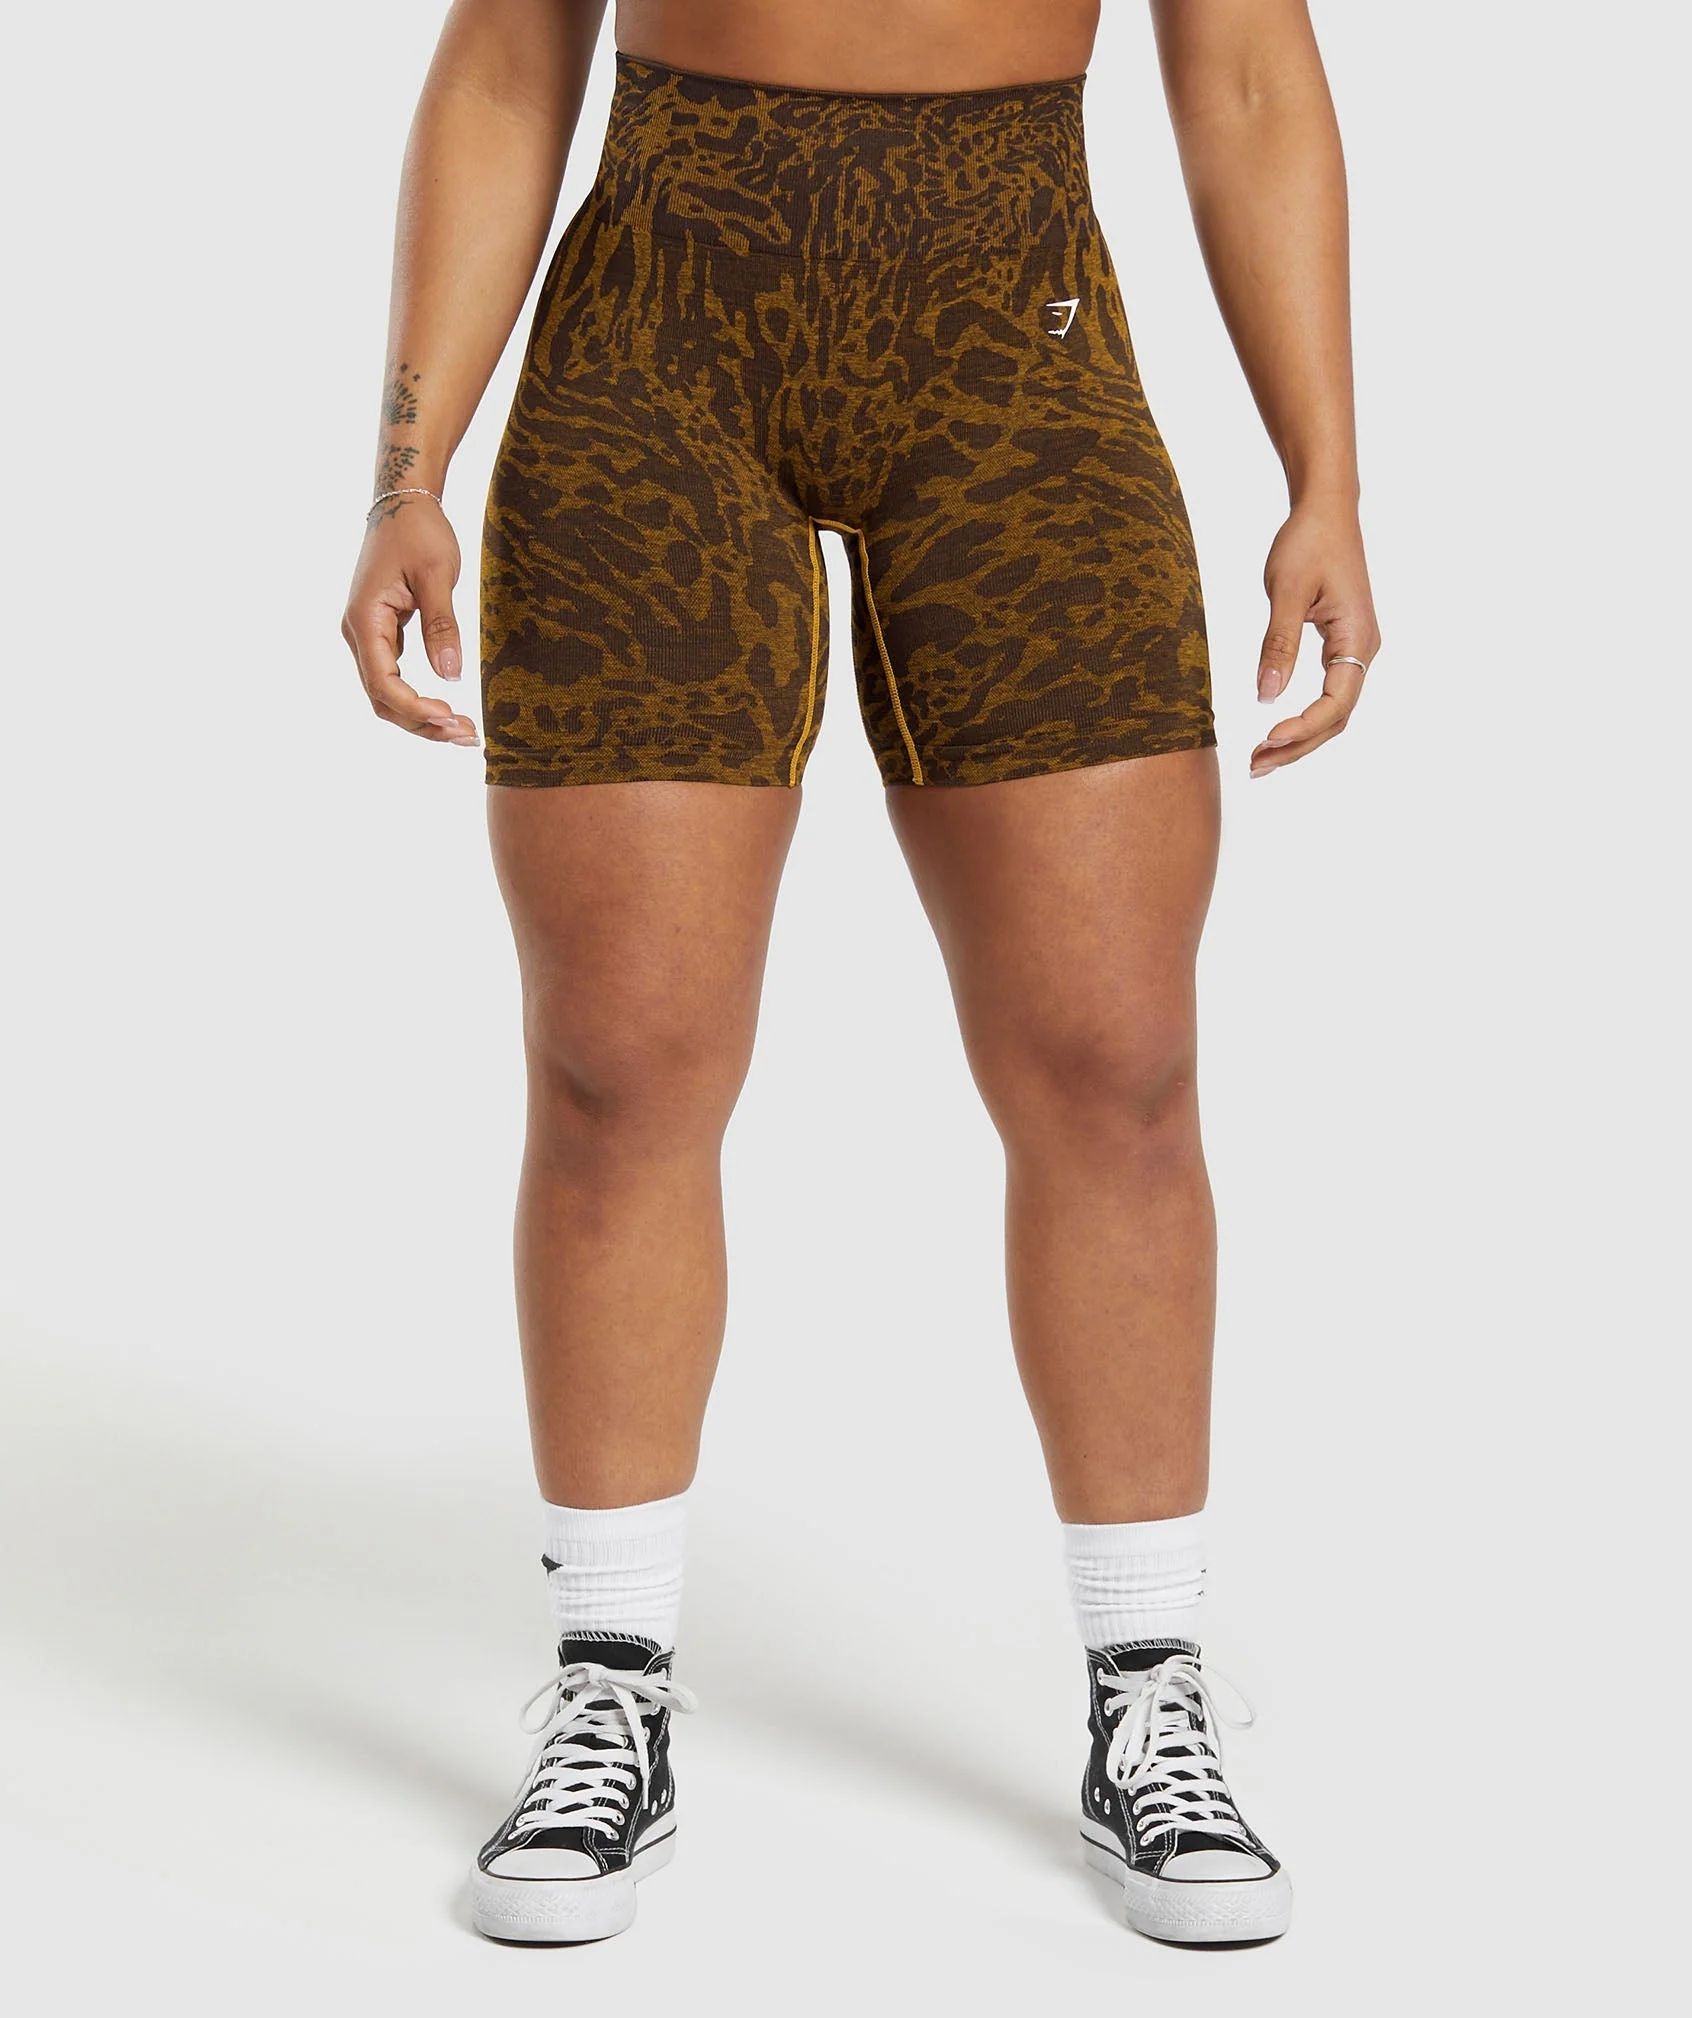 Gymshark Adapt Safari Tight Shorts - Archive Brown/Burnt Yellow | Gymshark US